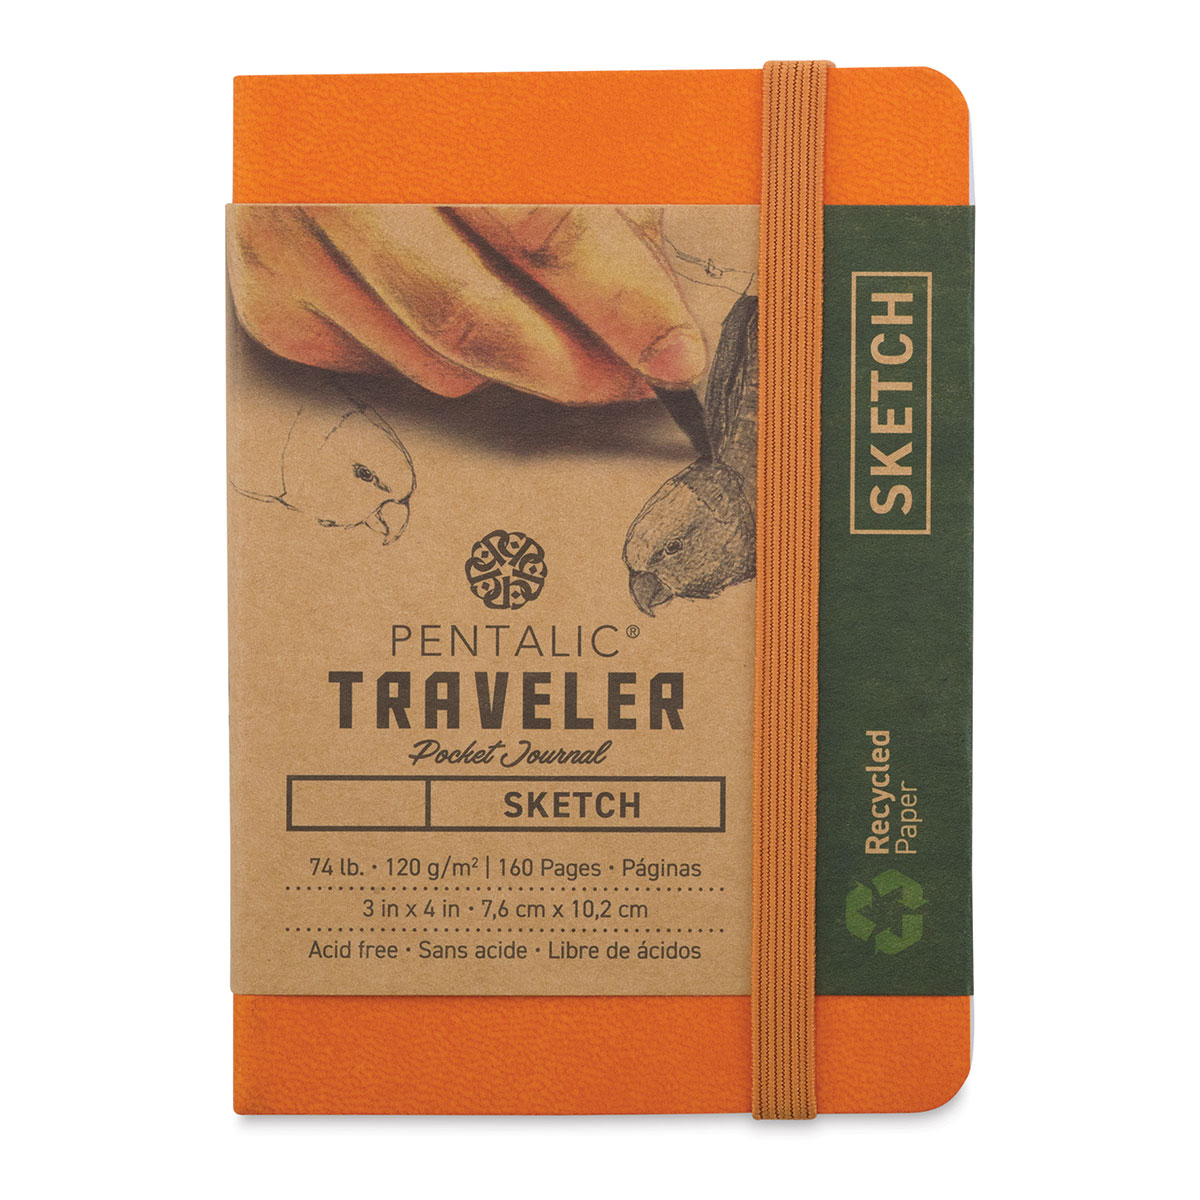 Pentalic Traveler Pocket Journal Sketch, 4 x 3, Orange